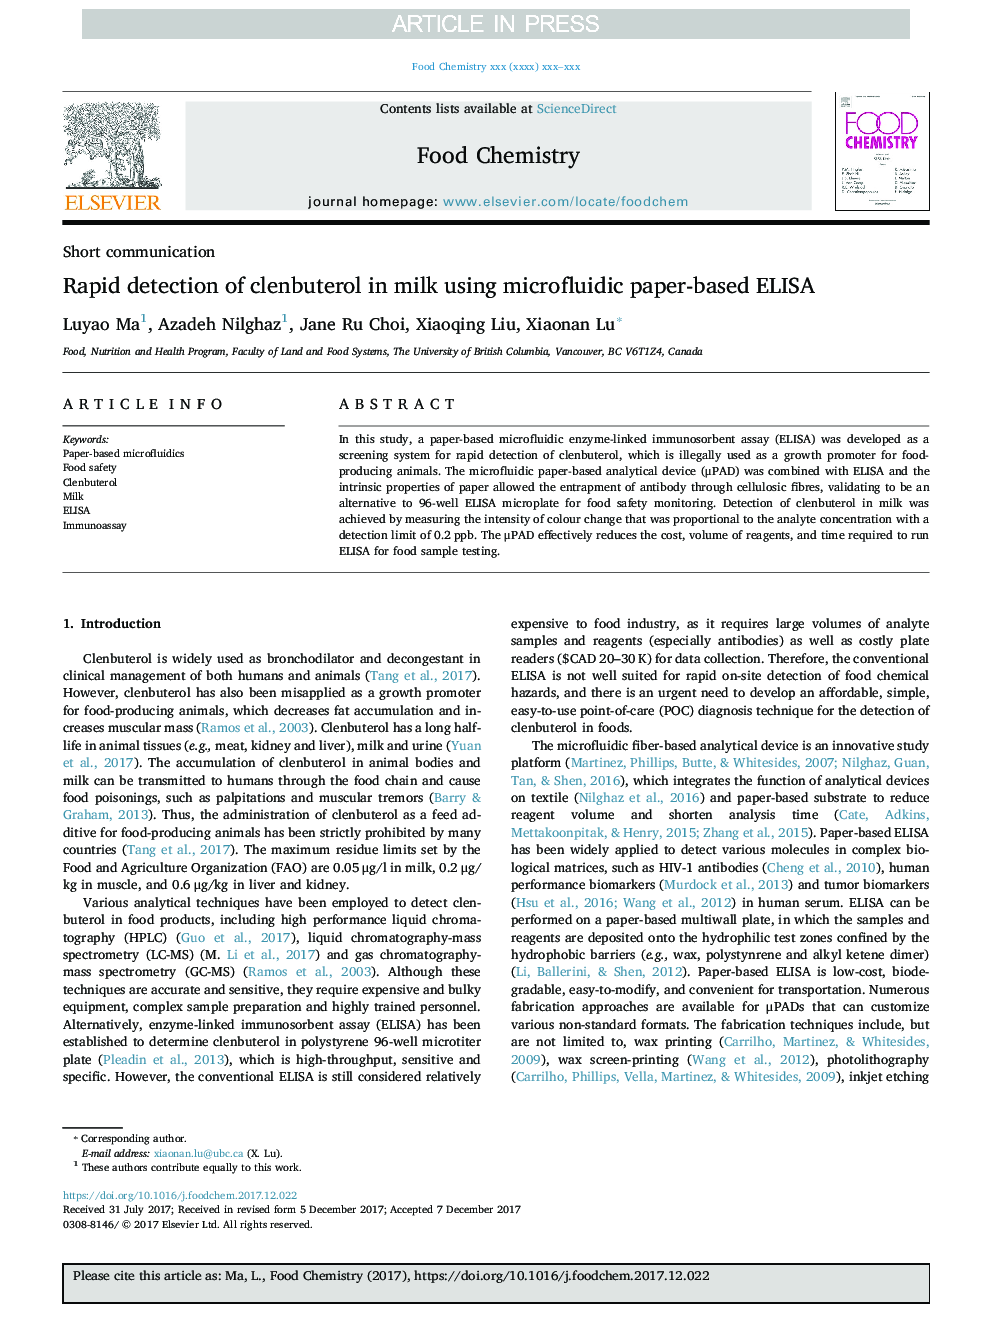 Rapid detection of clenbuterol in milk using microfluidic paper-based ELISA